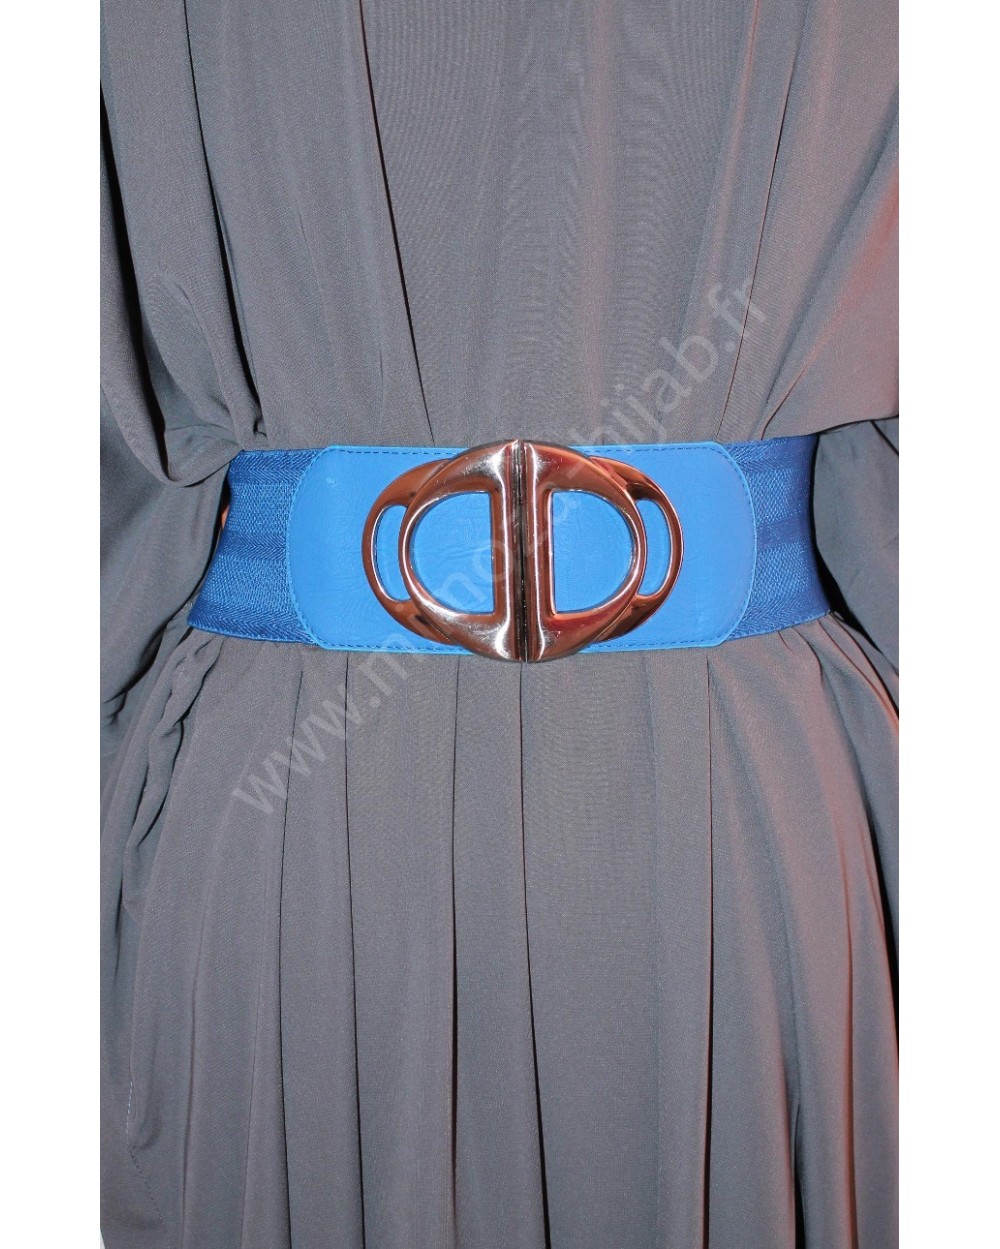 Badoo stretchy belt